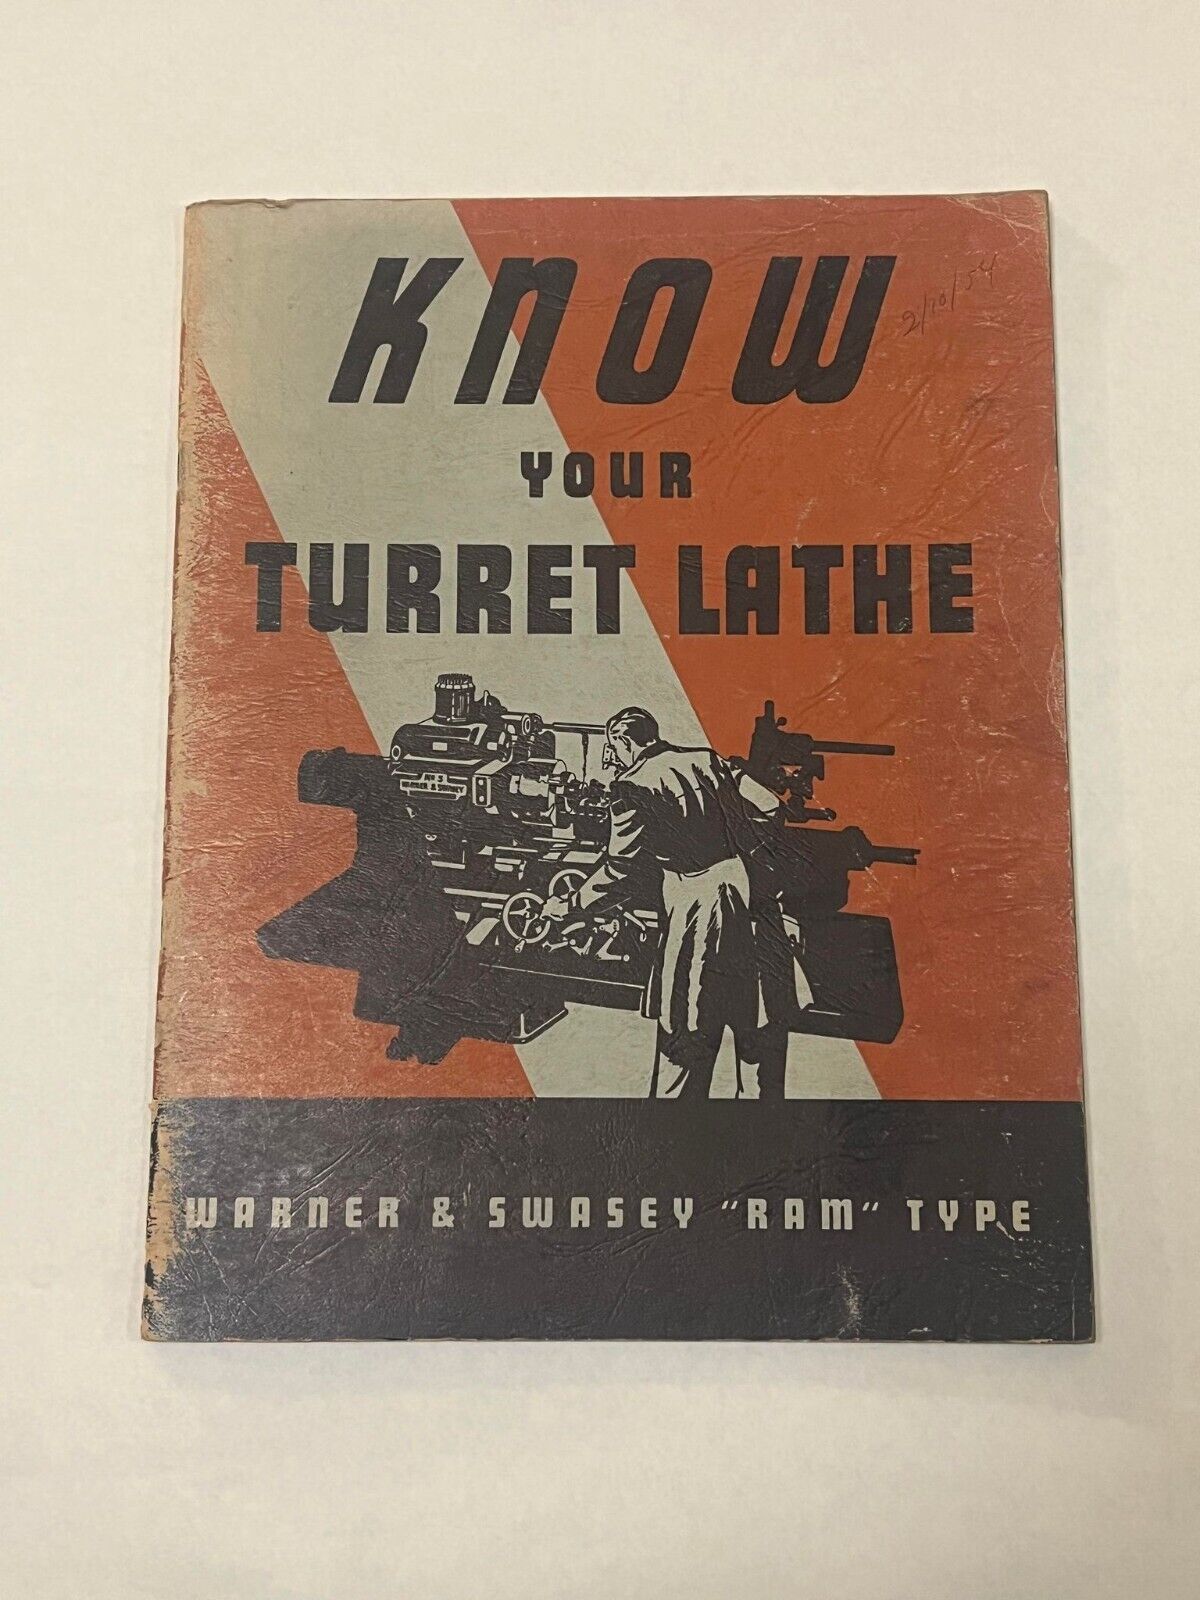 Vintage 1941 Know Your Turret Lathe, Warner & Swasey “Ram” Type Manual